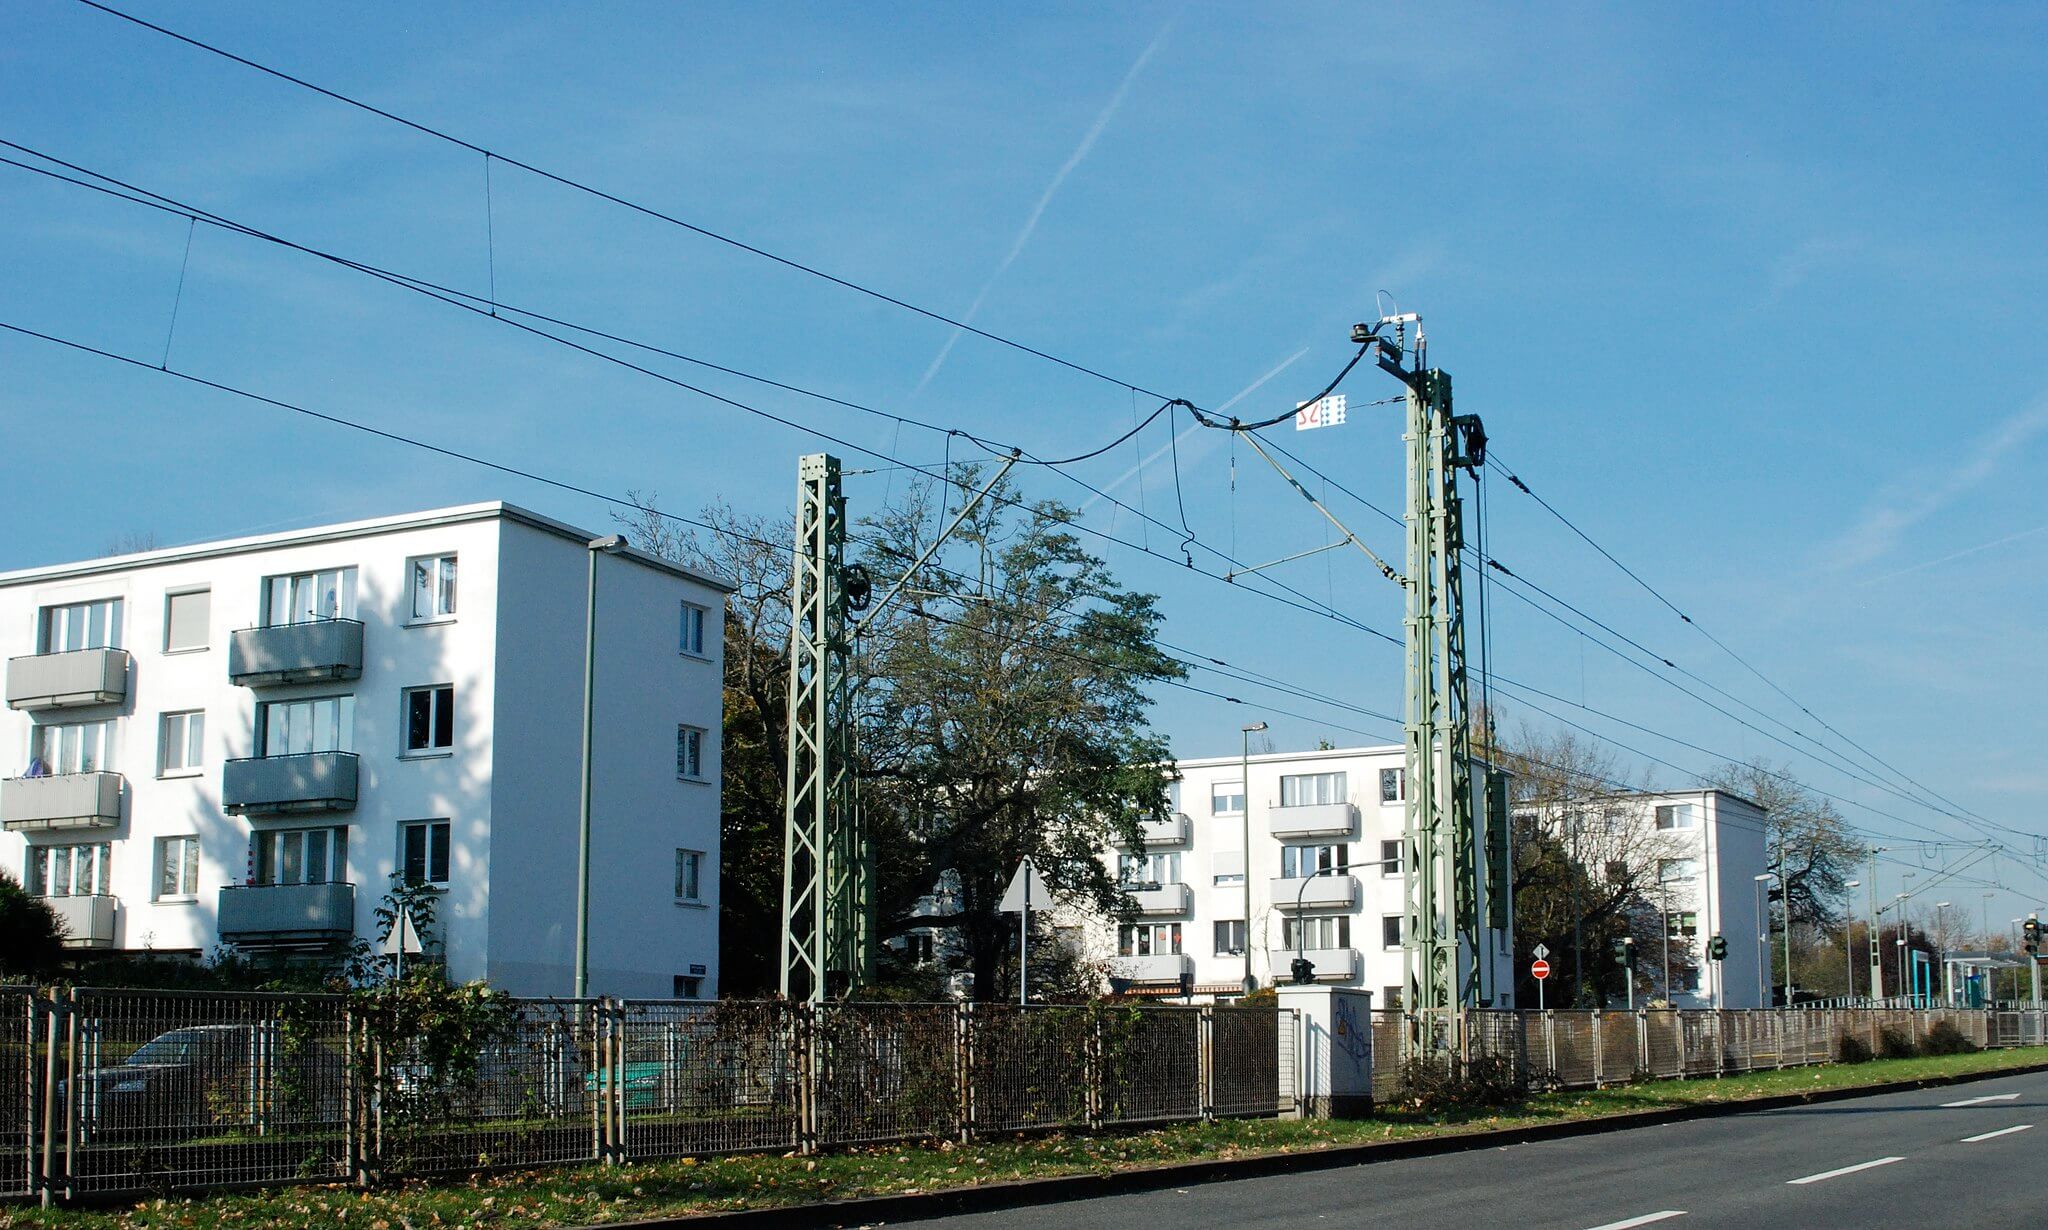 Die Siedlung Westhausen in Frankfurt, 2013, Foto: 25asd/Wikimedia Commons 